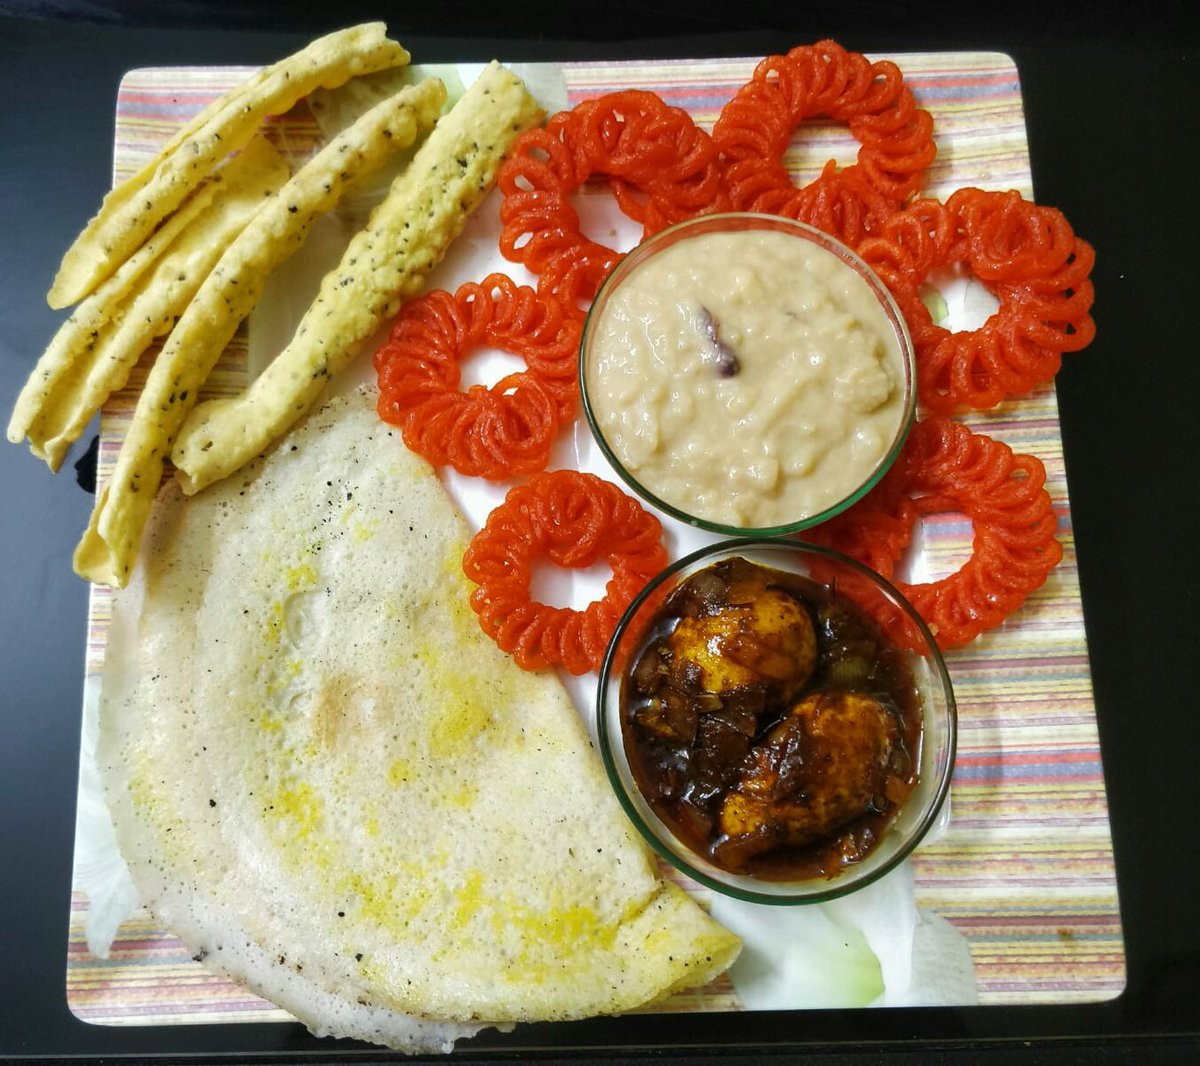 Sunday Breakfast Platter😊😊
#breakfastplatter #foodie #foodtweeter #foodworld #sambalpur #odisha